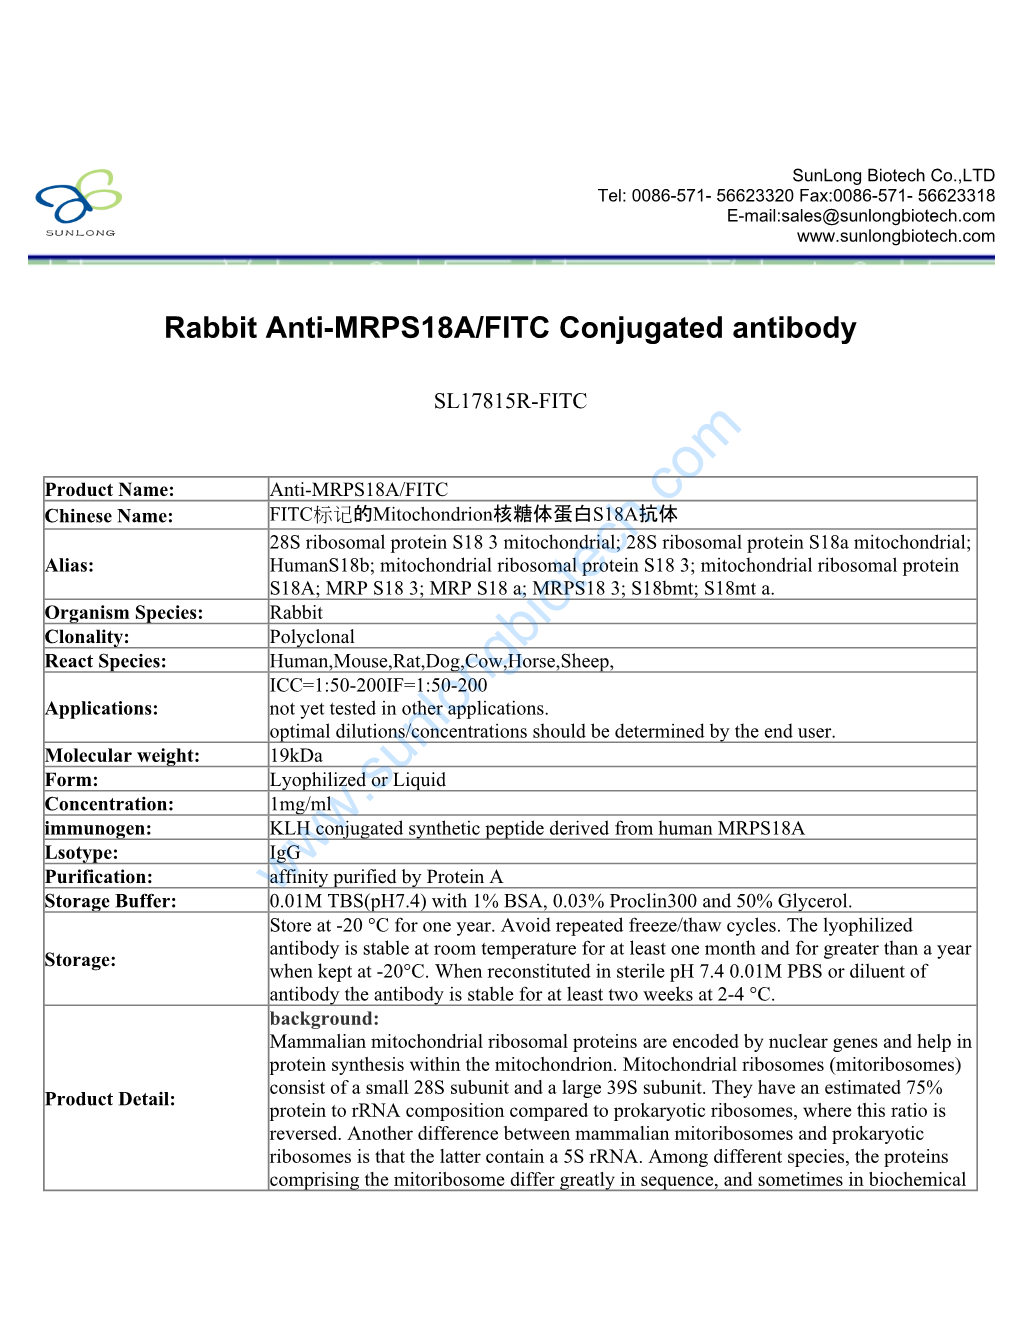 Rabbit Anti-MRPS18A/FITC Conjugated Antibody-SL17815R